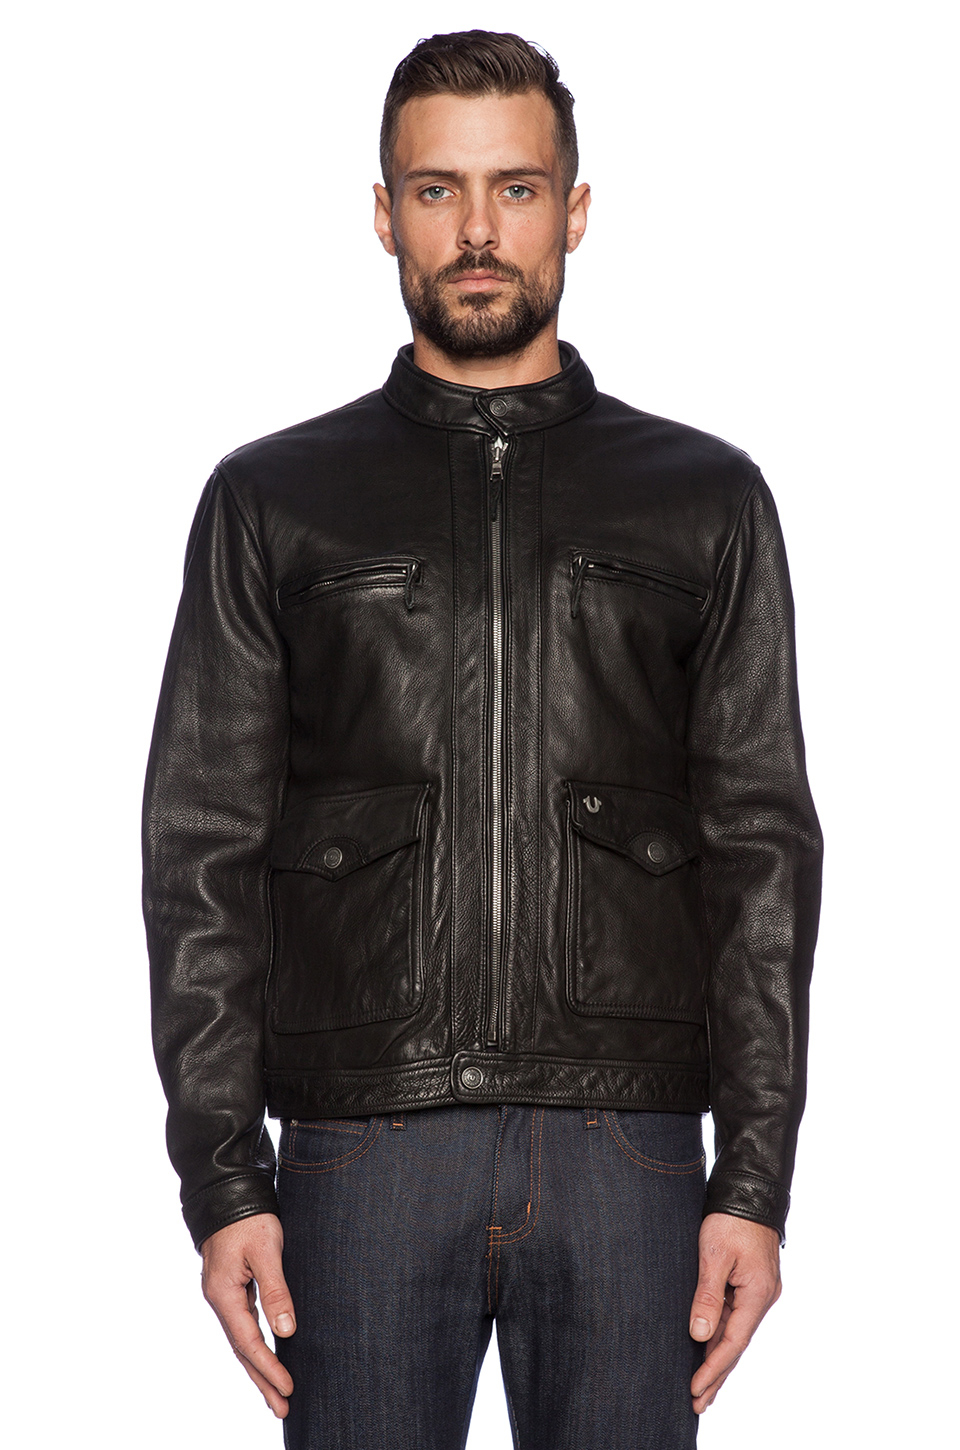 Lyst - True Religion Solid Leather Racer Jacket in Black for Men